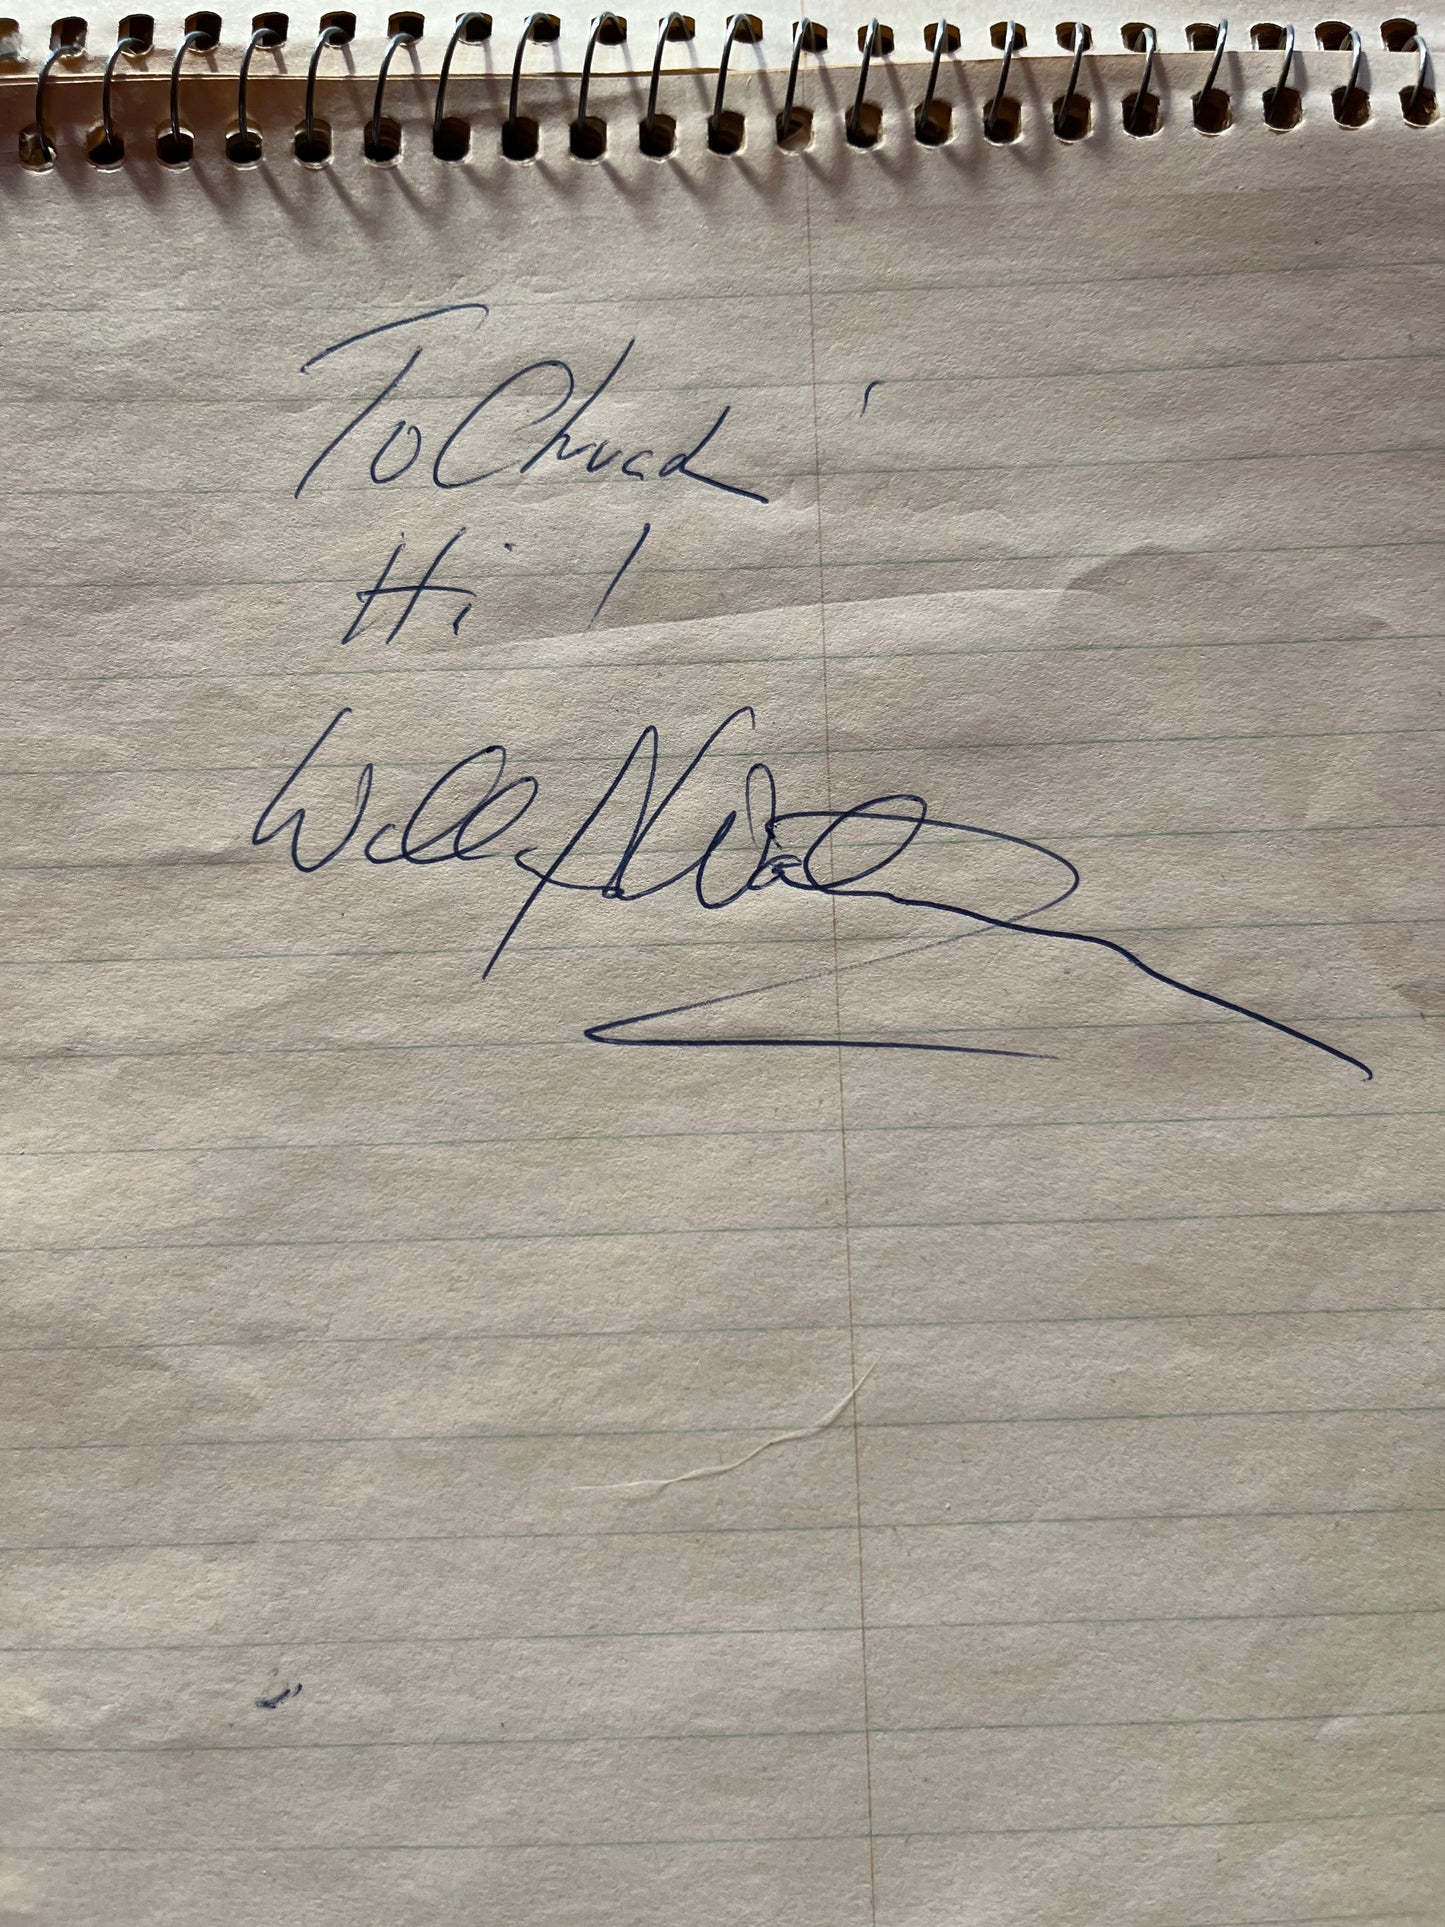 Willard Waterman, a.k.a. The Great Gildersleeve (autograph)